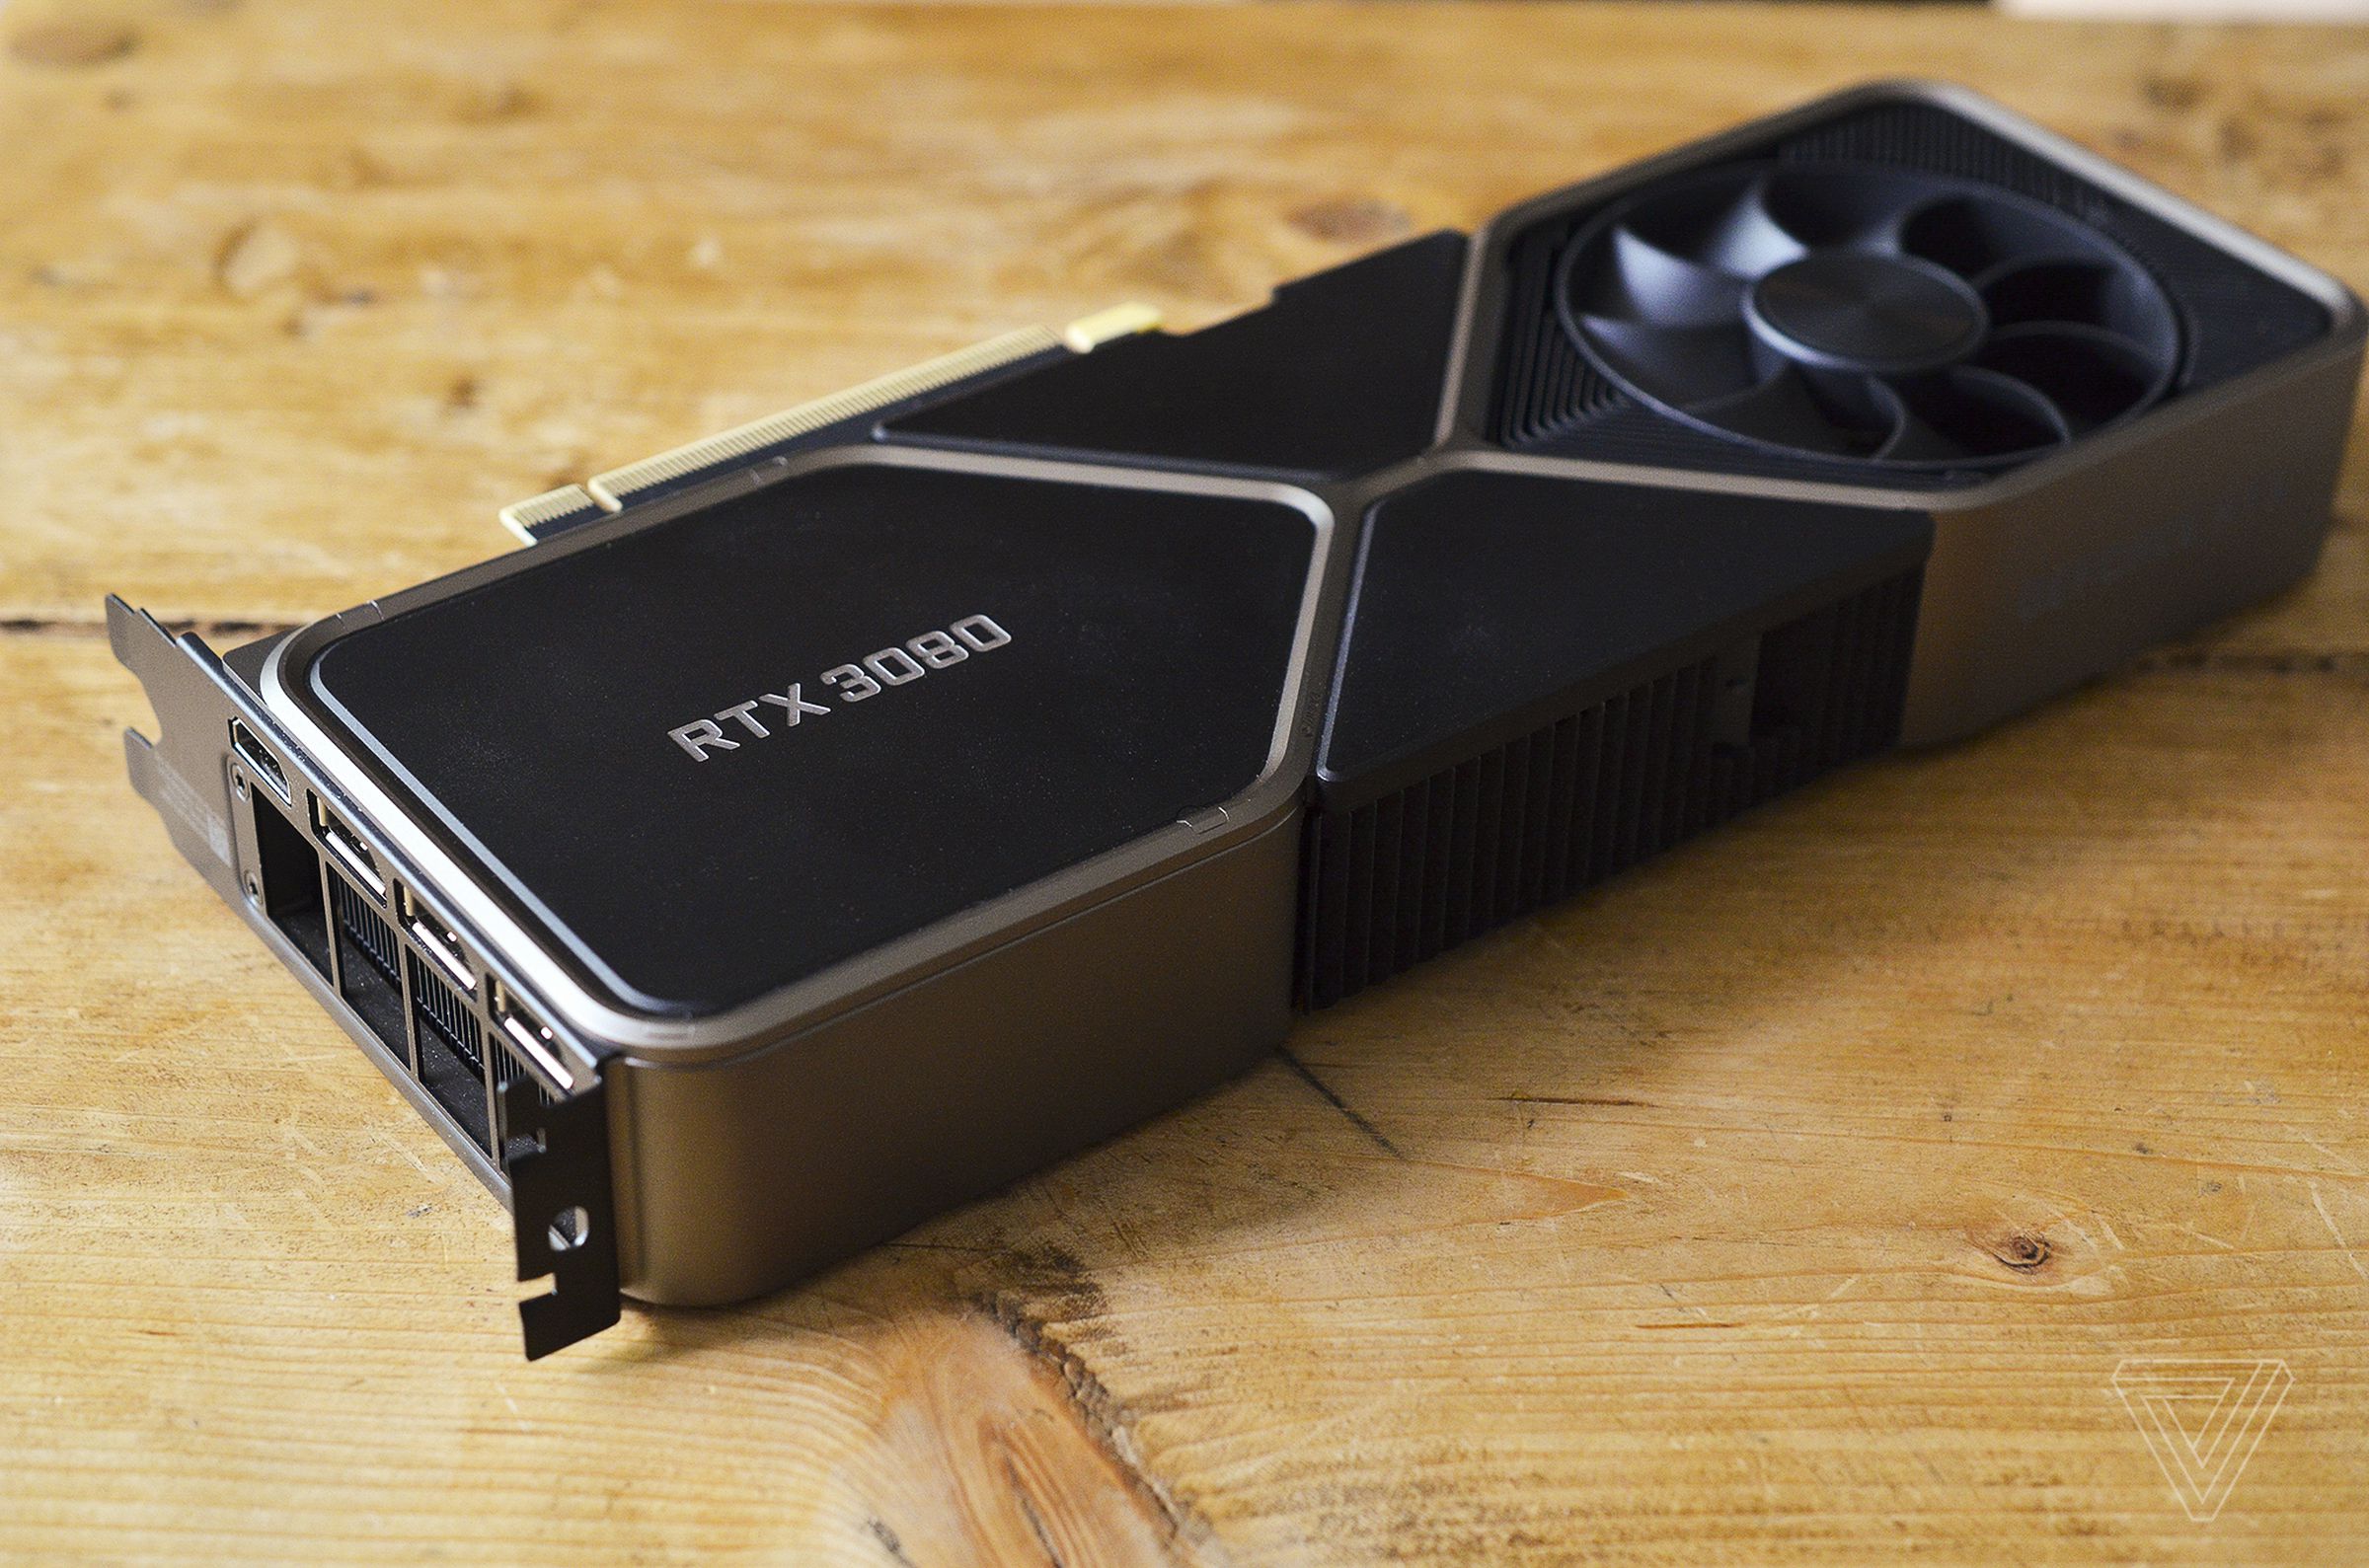 A Nvidia GeForce RTX 3080 graphics card